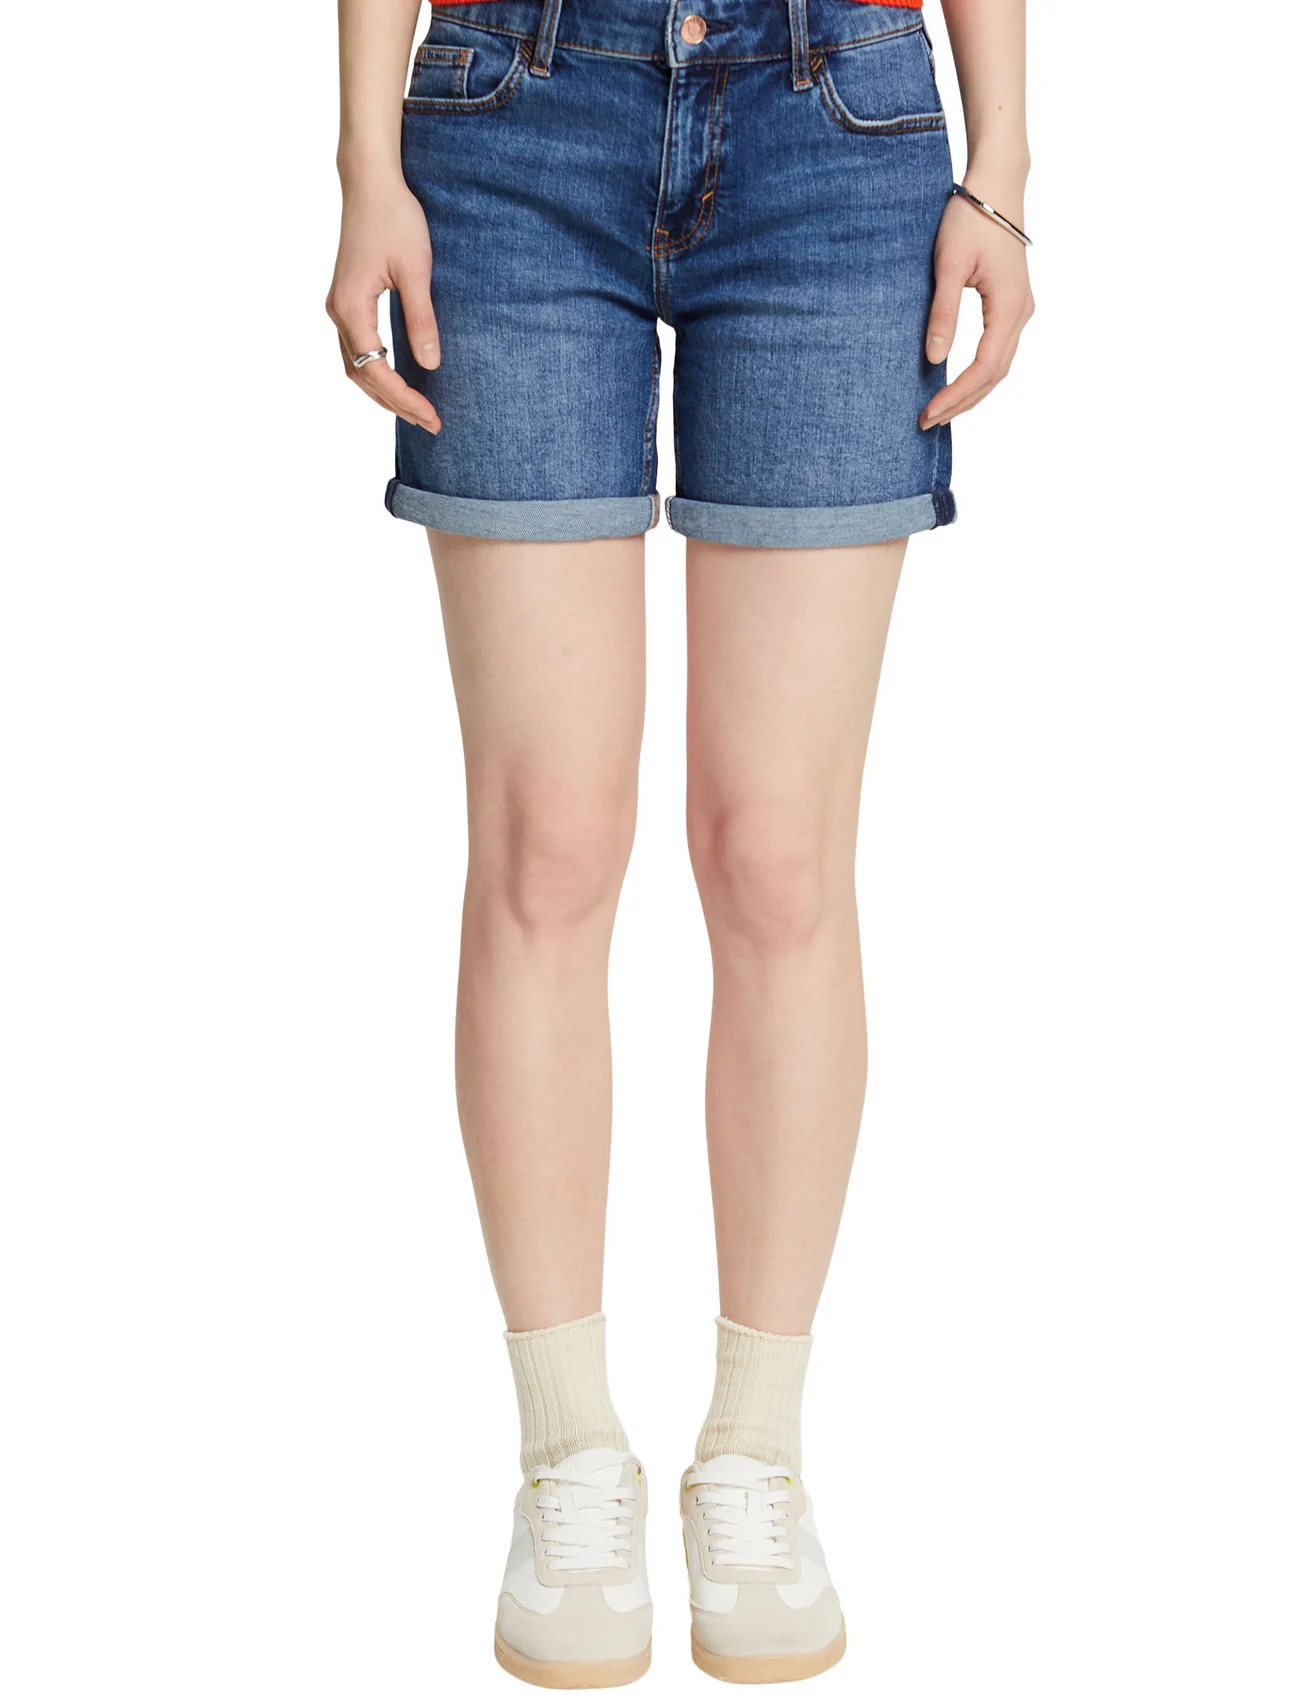 Esprit Casual - Shorts denim - jeansowe szorty - blue medium wash - 1